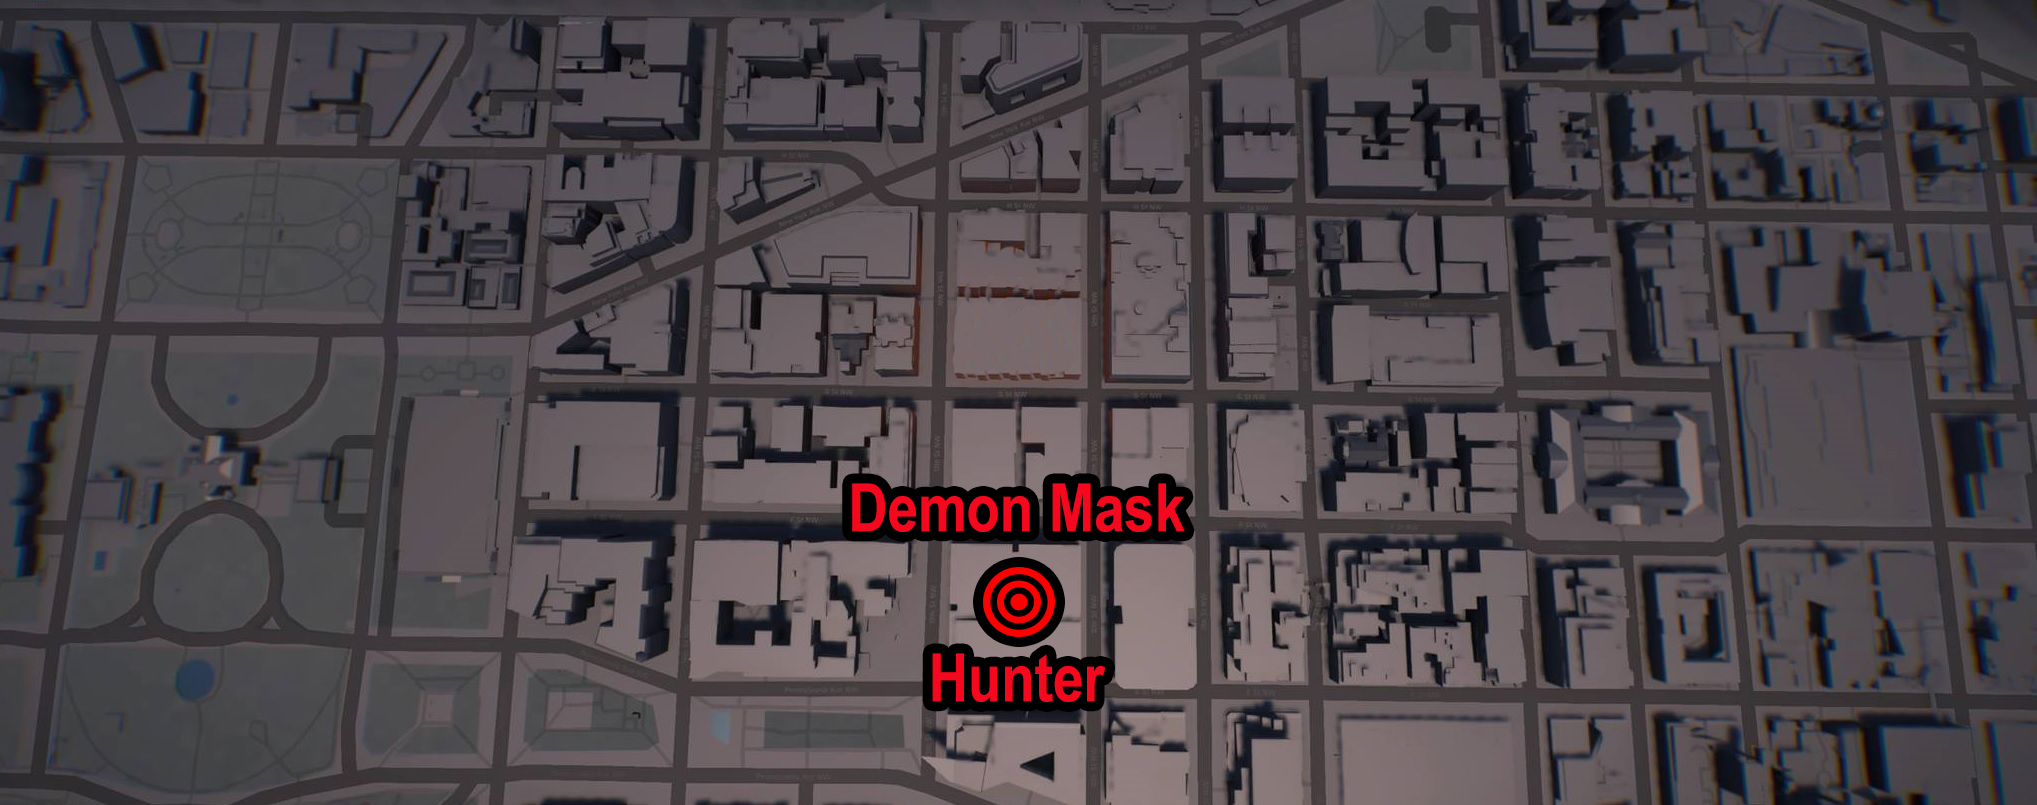 Demon Mask The 2 | Secret Hunters Locations | PrimeWikis